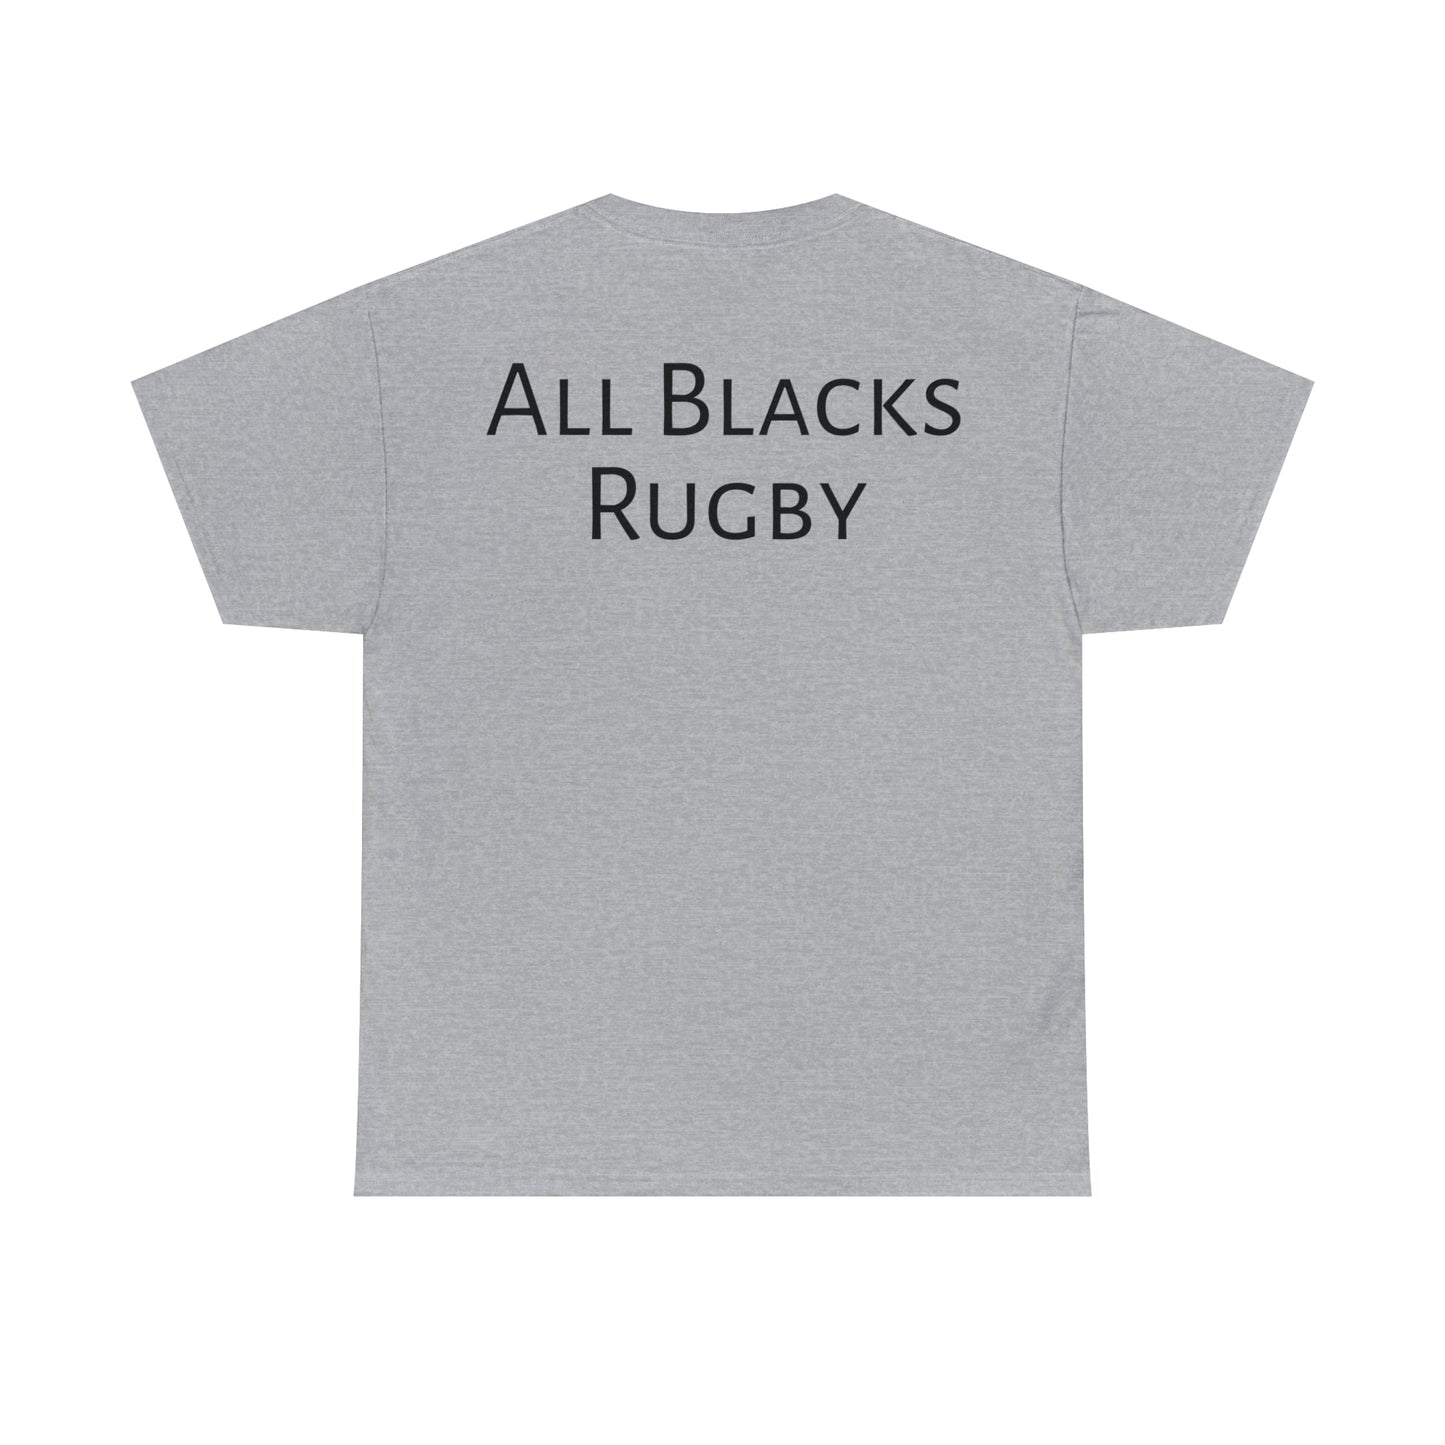 Ready All Blacks - light shirts